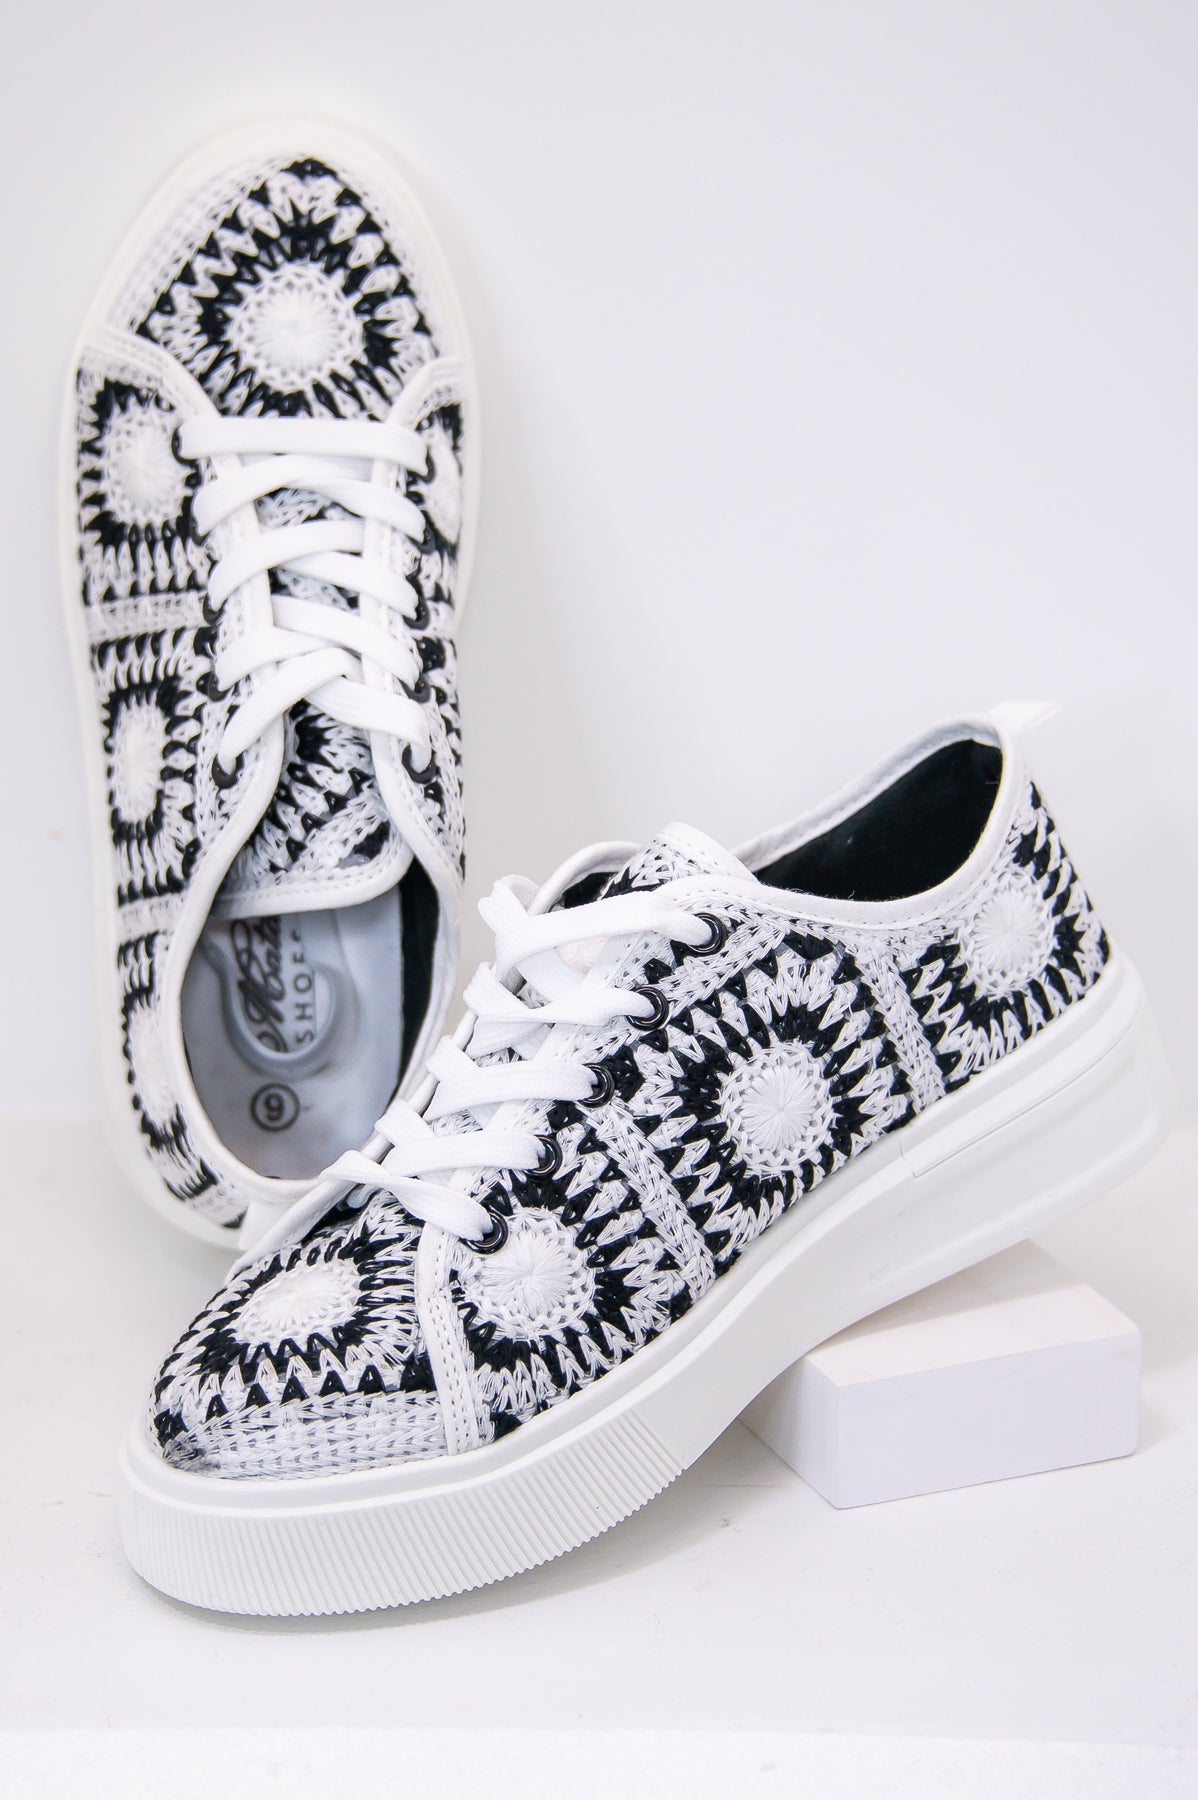 Walking With Purpose Black/White Woven Platform Sneakers - SHO2690BK